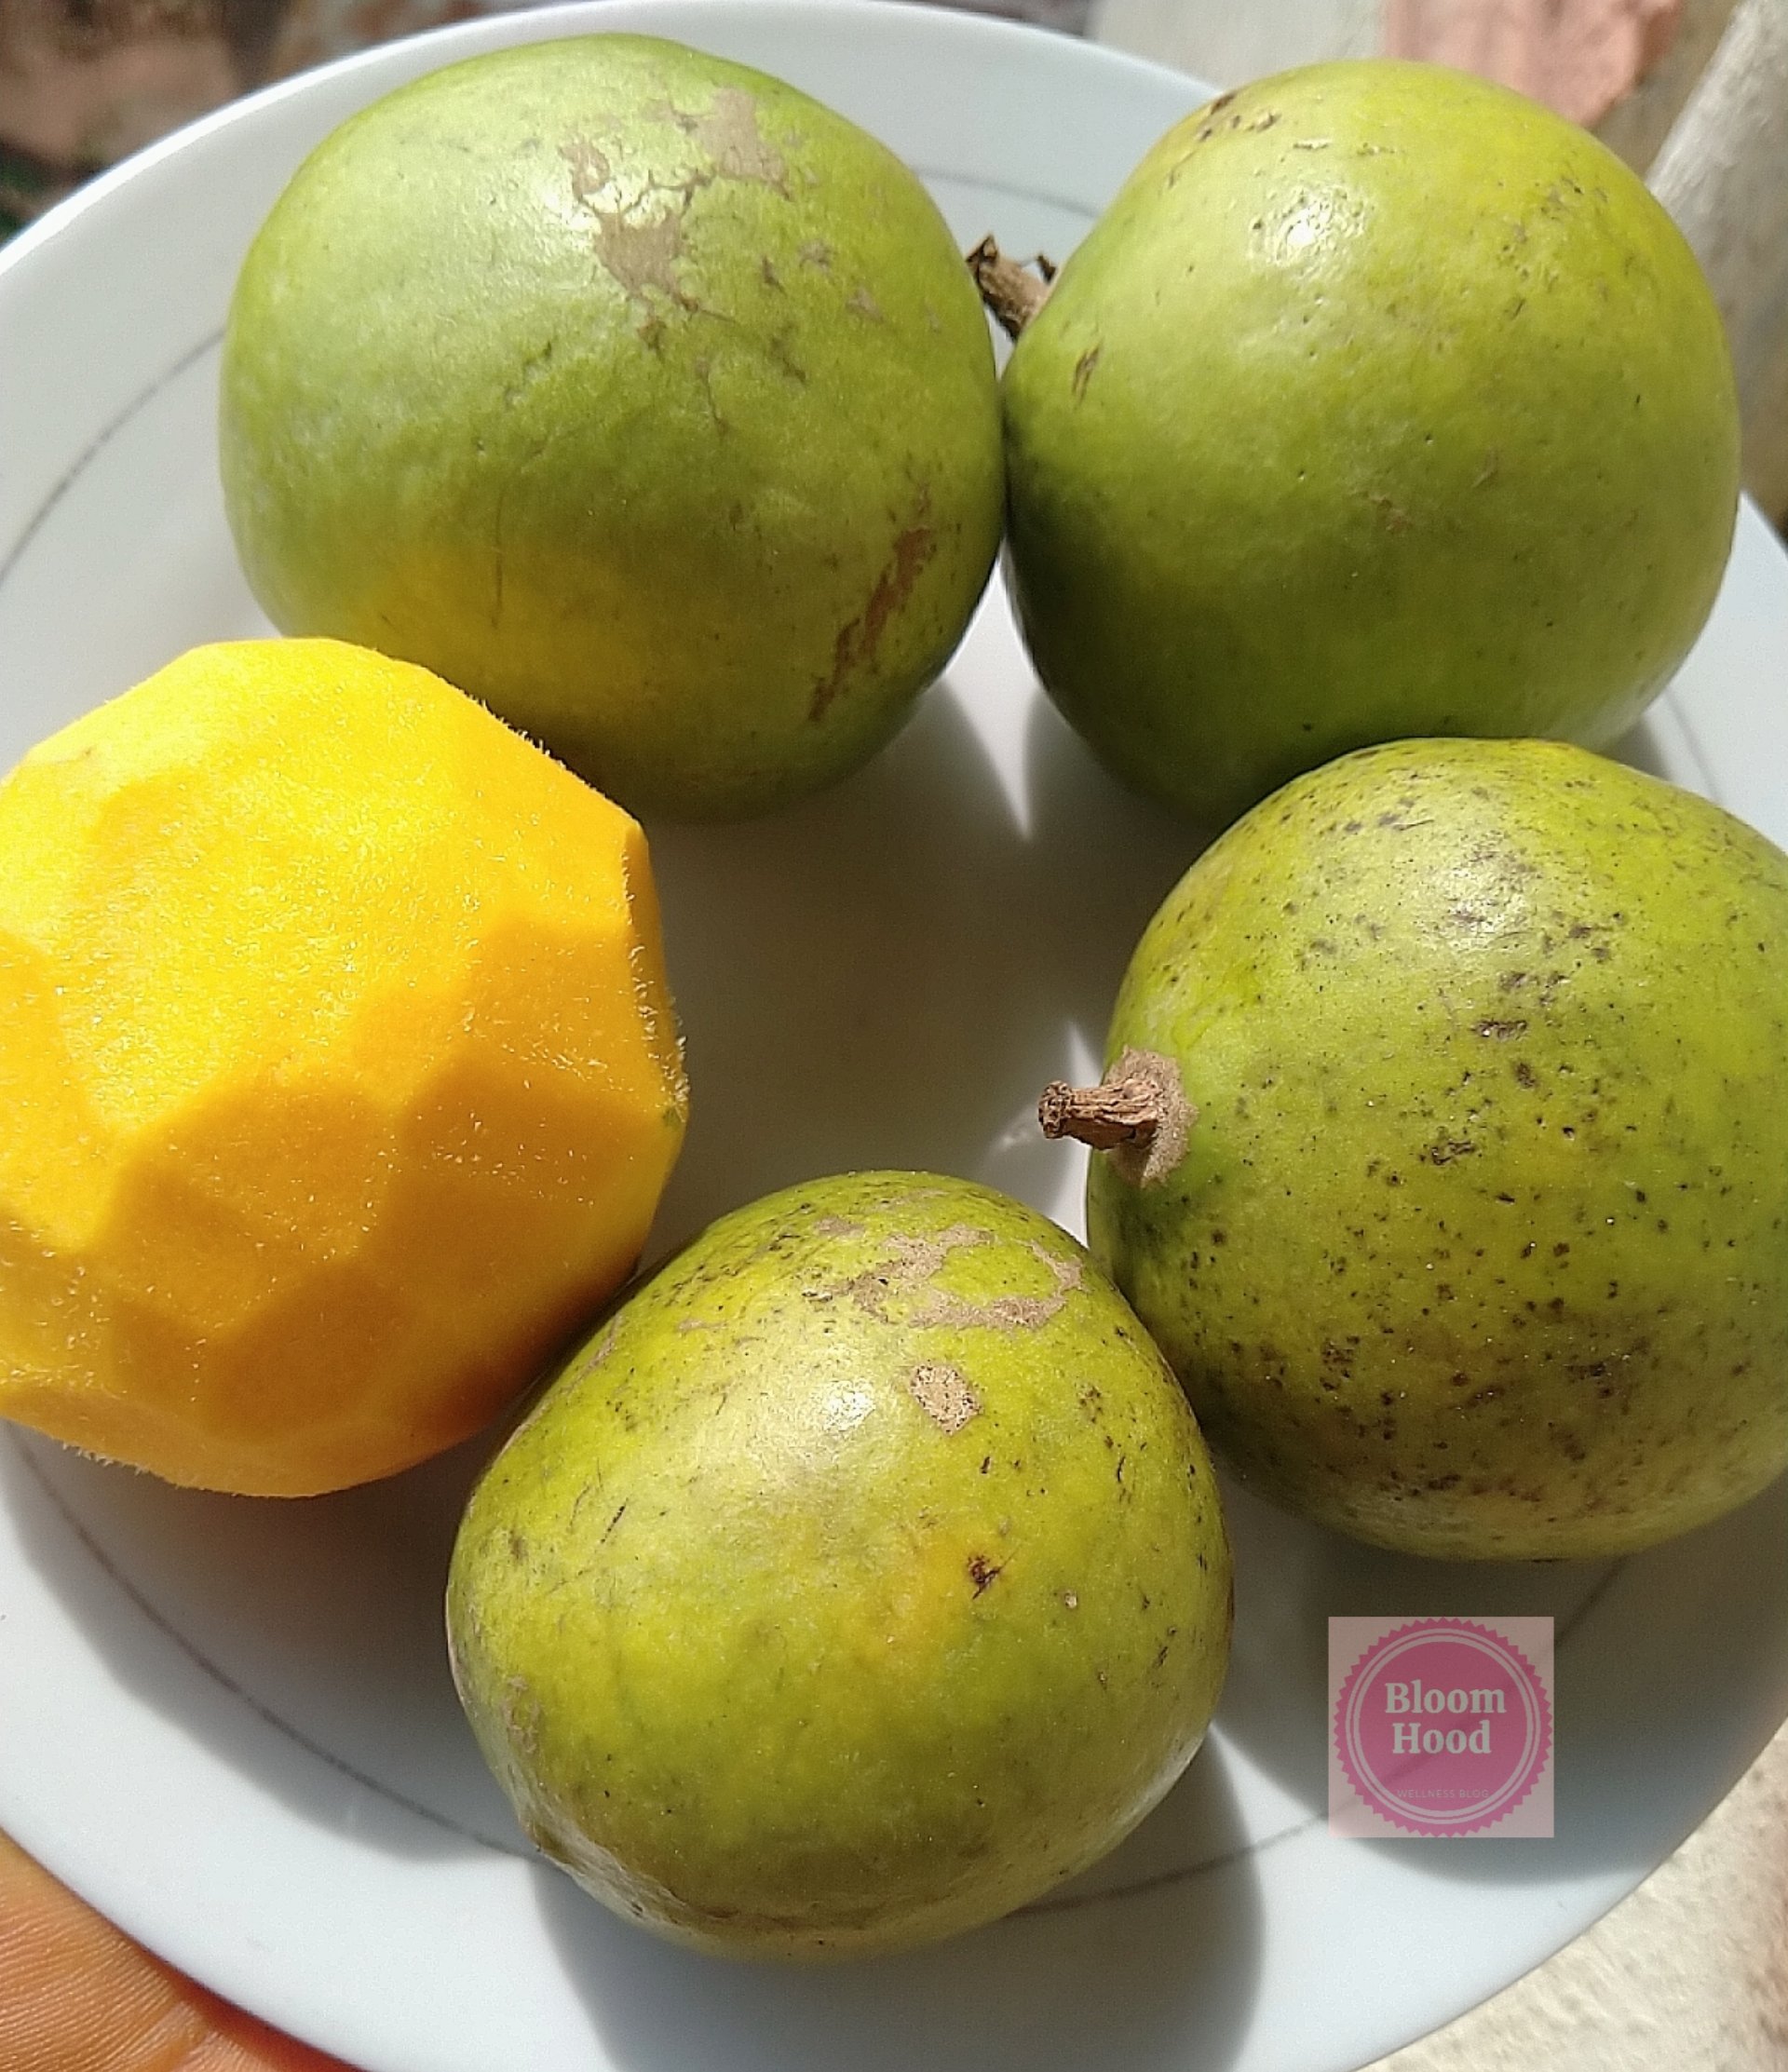 Bush mango (ugiri) Irvingia Gabonensis

